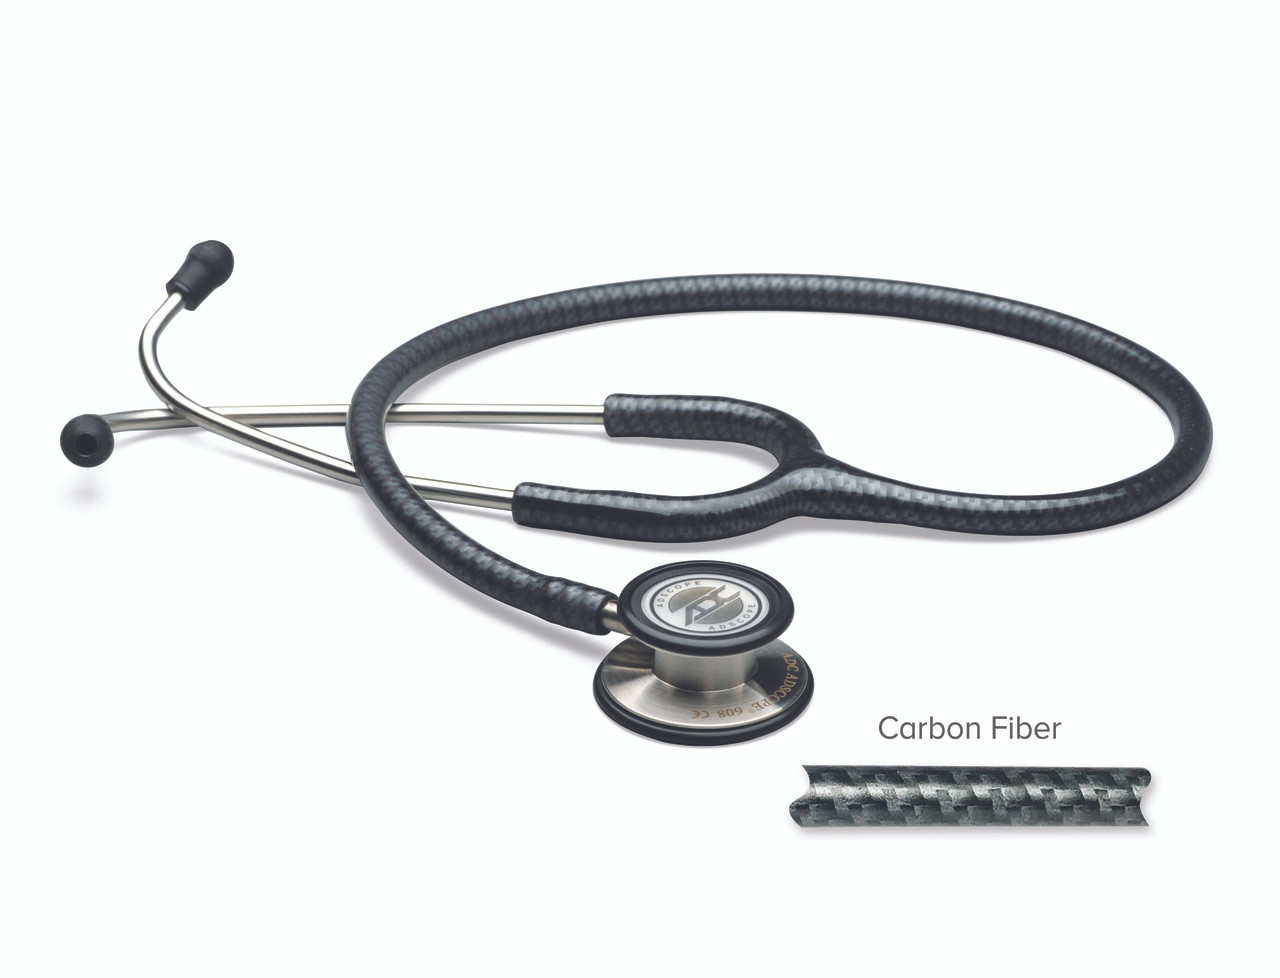 ADC Adscope 608 Carbon Fiber Convertible Clinician Stethoscope